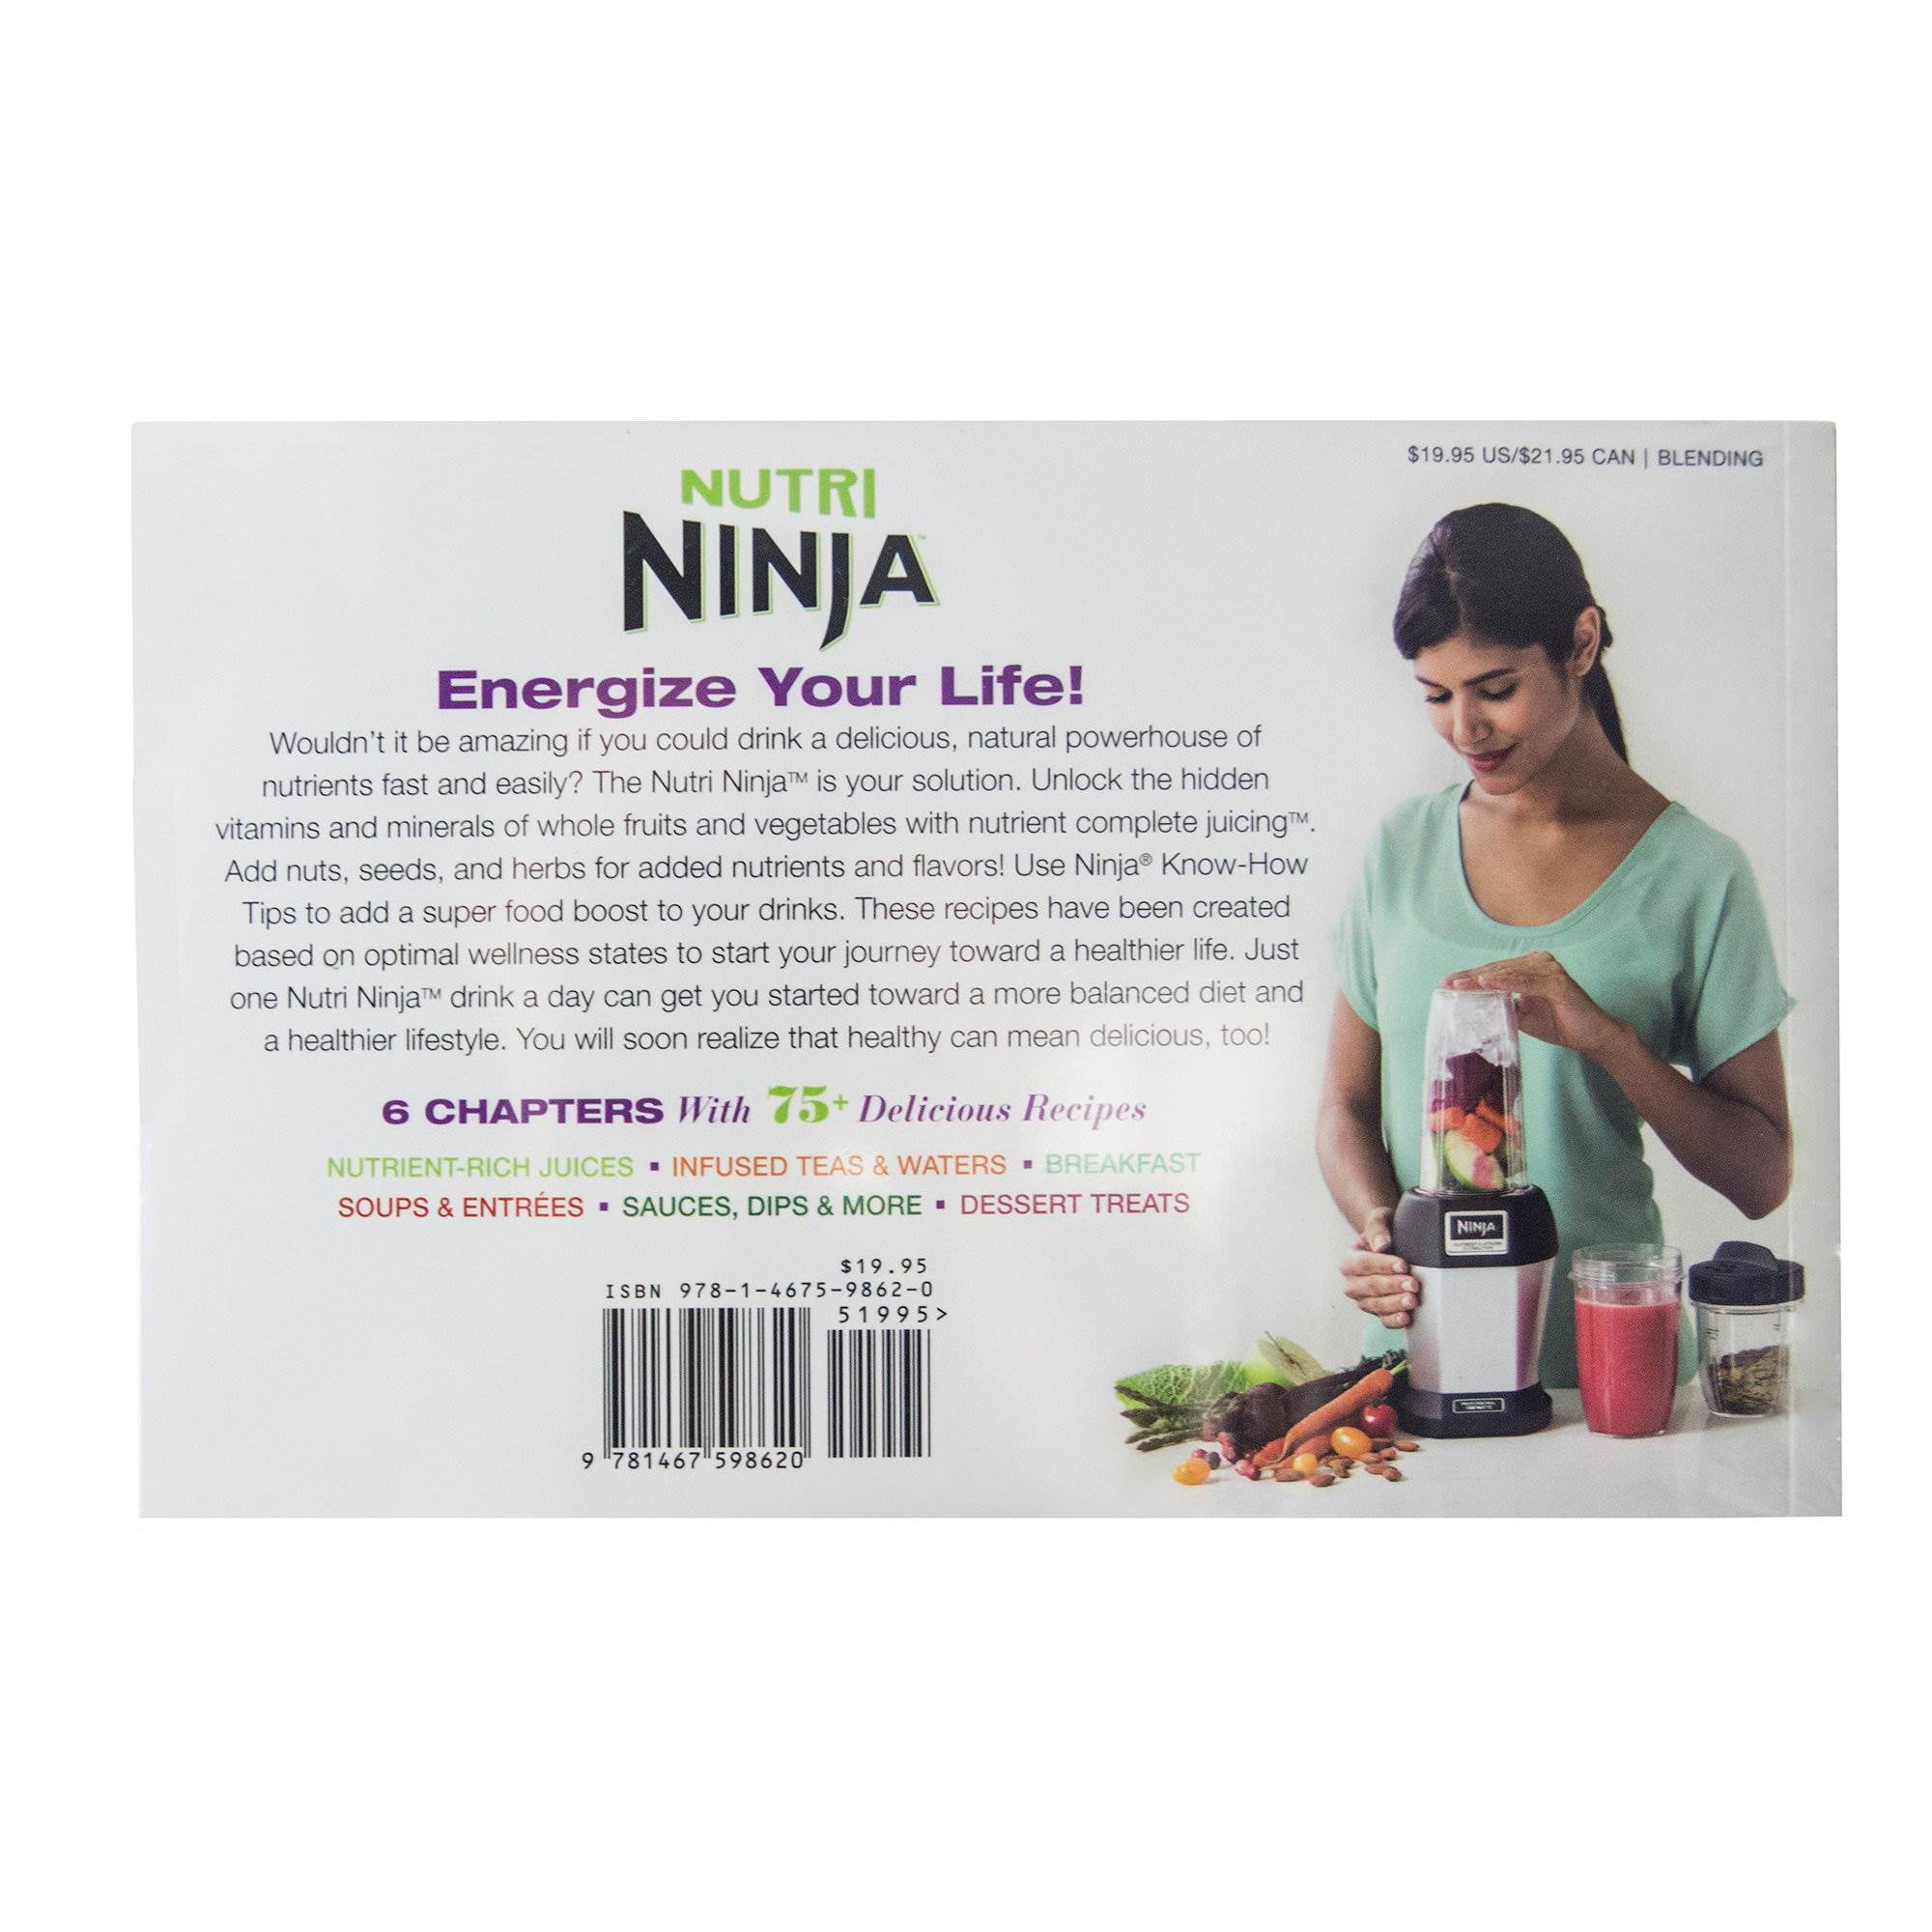 Nutri Ninja 900W Professional Blender Smoothies #1 Most Powerful